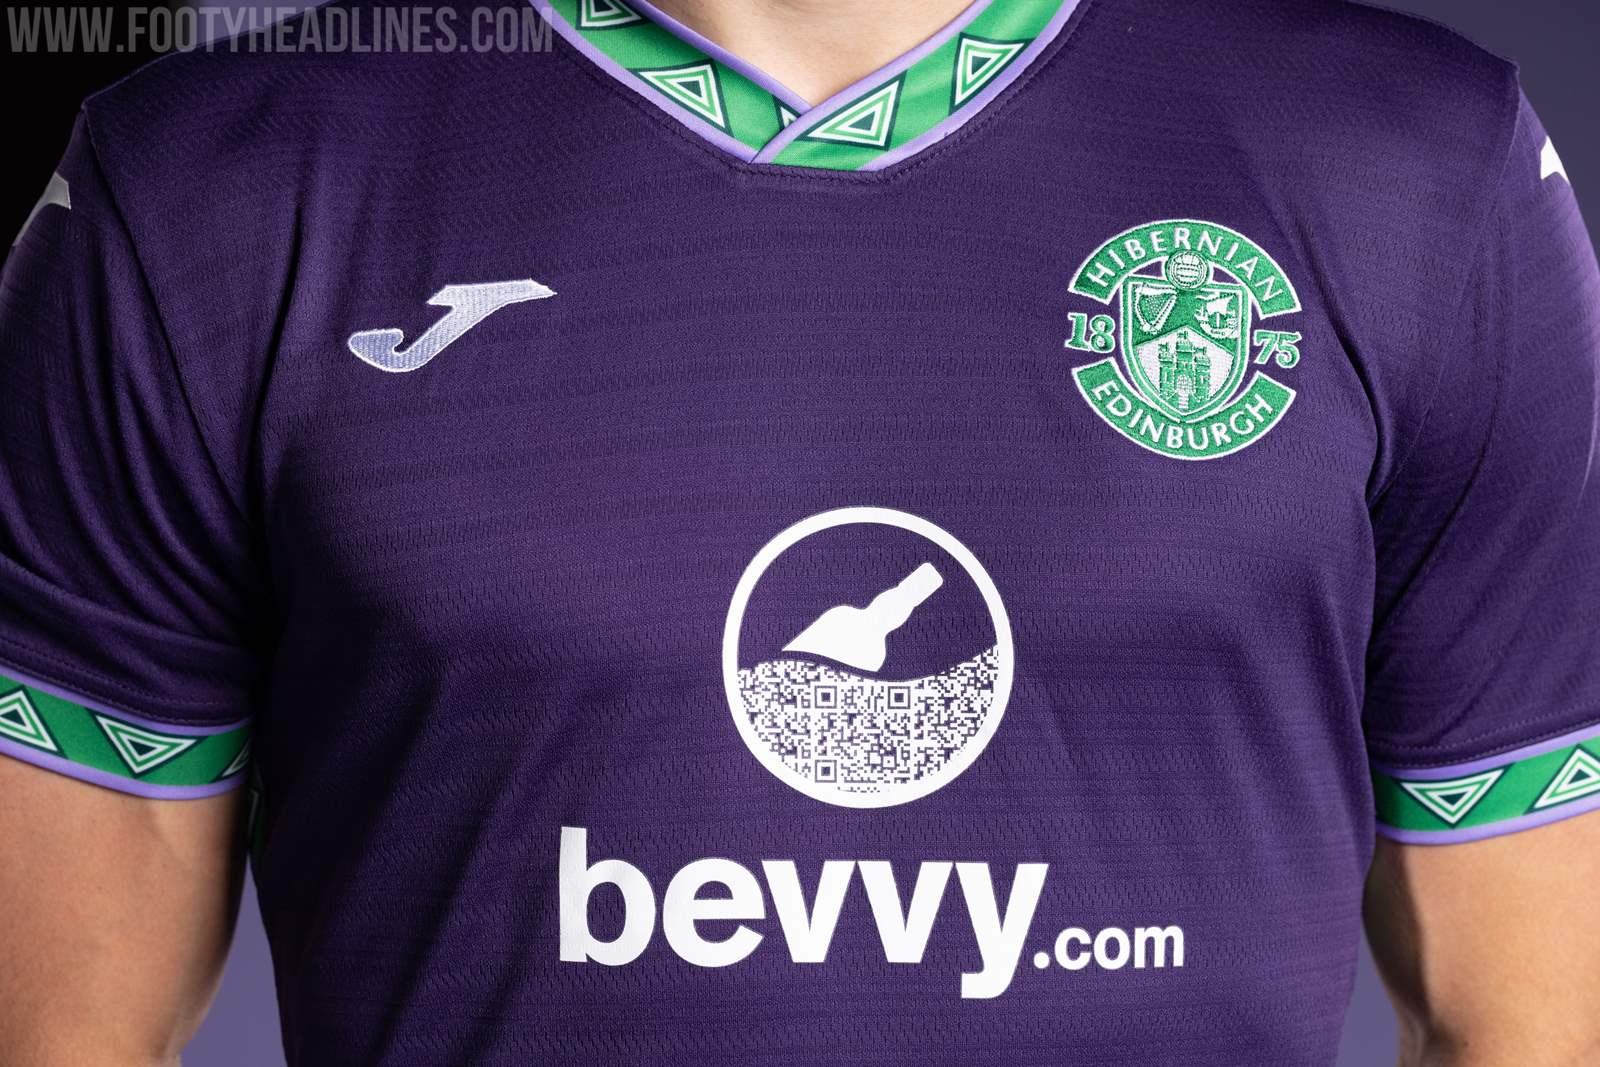 Celtic 23-24 Away Kit Leaked? - Footy Headlines